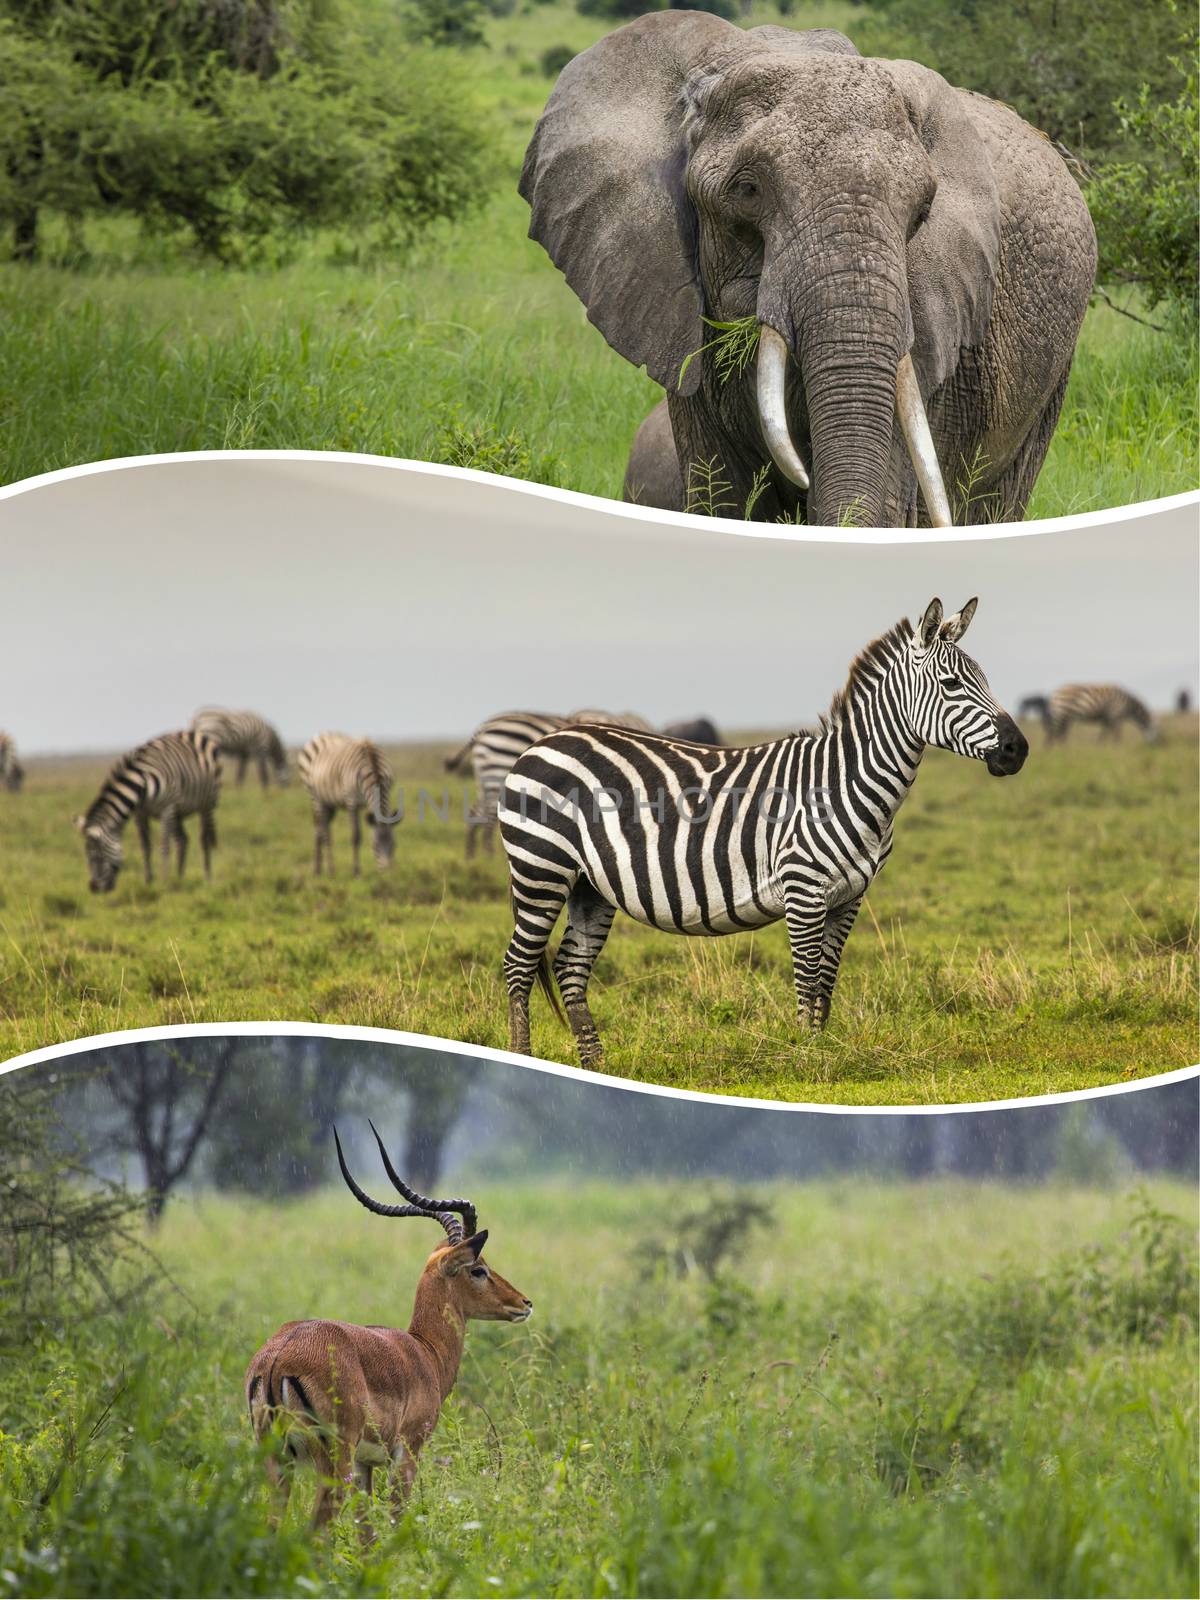 Collage of Animals from Tanzania - travel background (my photos) by mariusz_prusaczyk